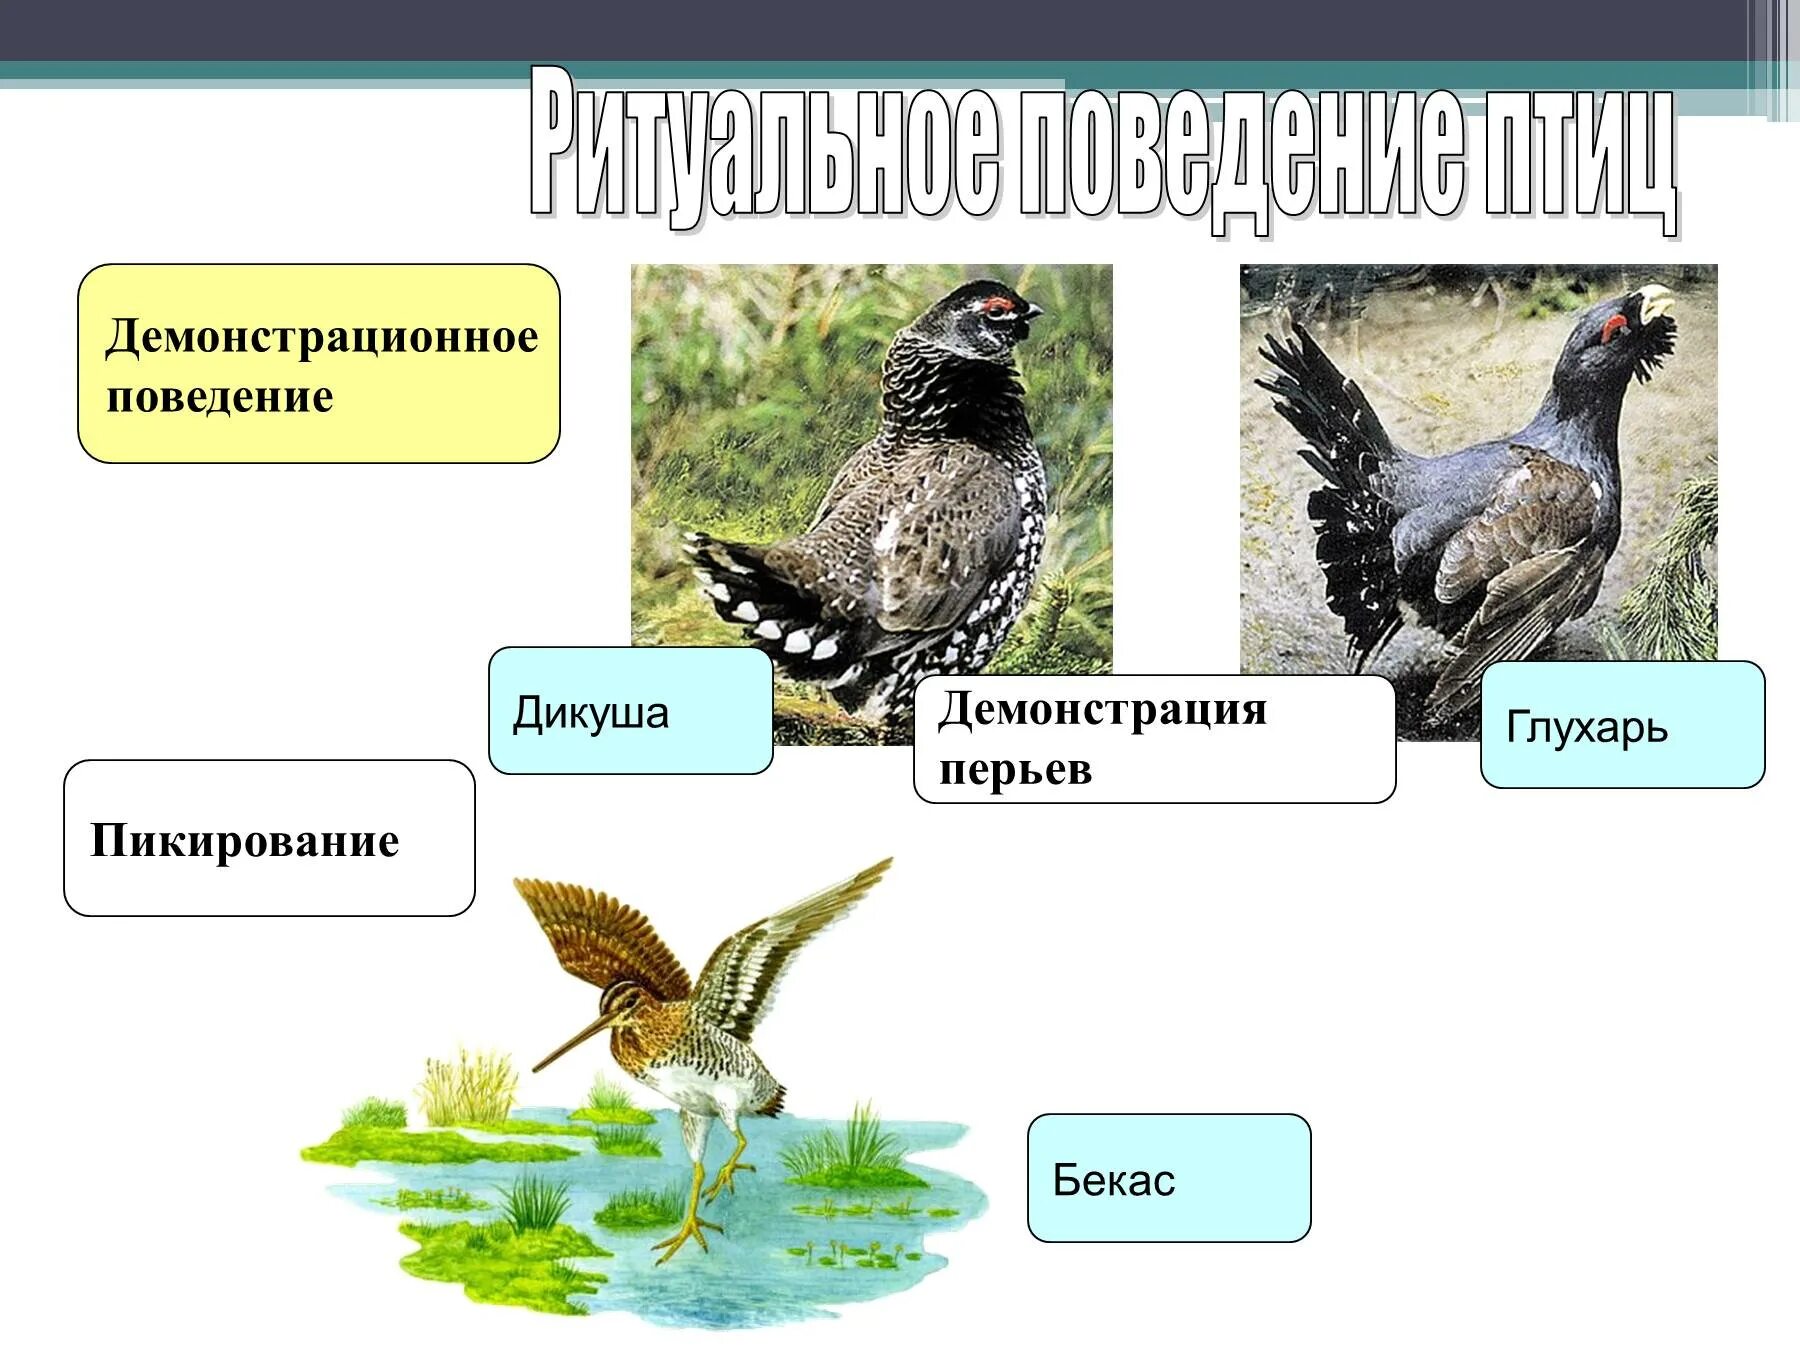 Размножение птиц презентация 7 класс. Демонстрационное поведение птиц. Биология размножение птиц. Класс птицы поведение. Размножение птиц 7 класс.